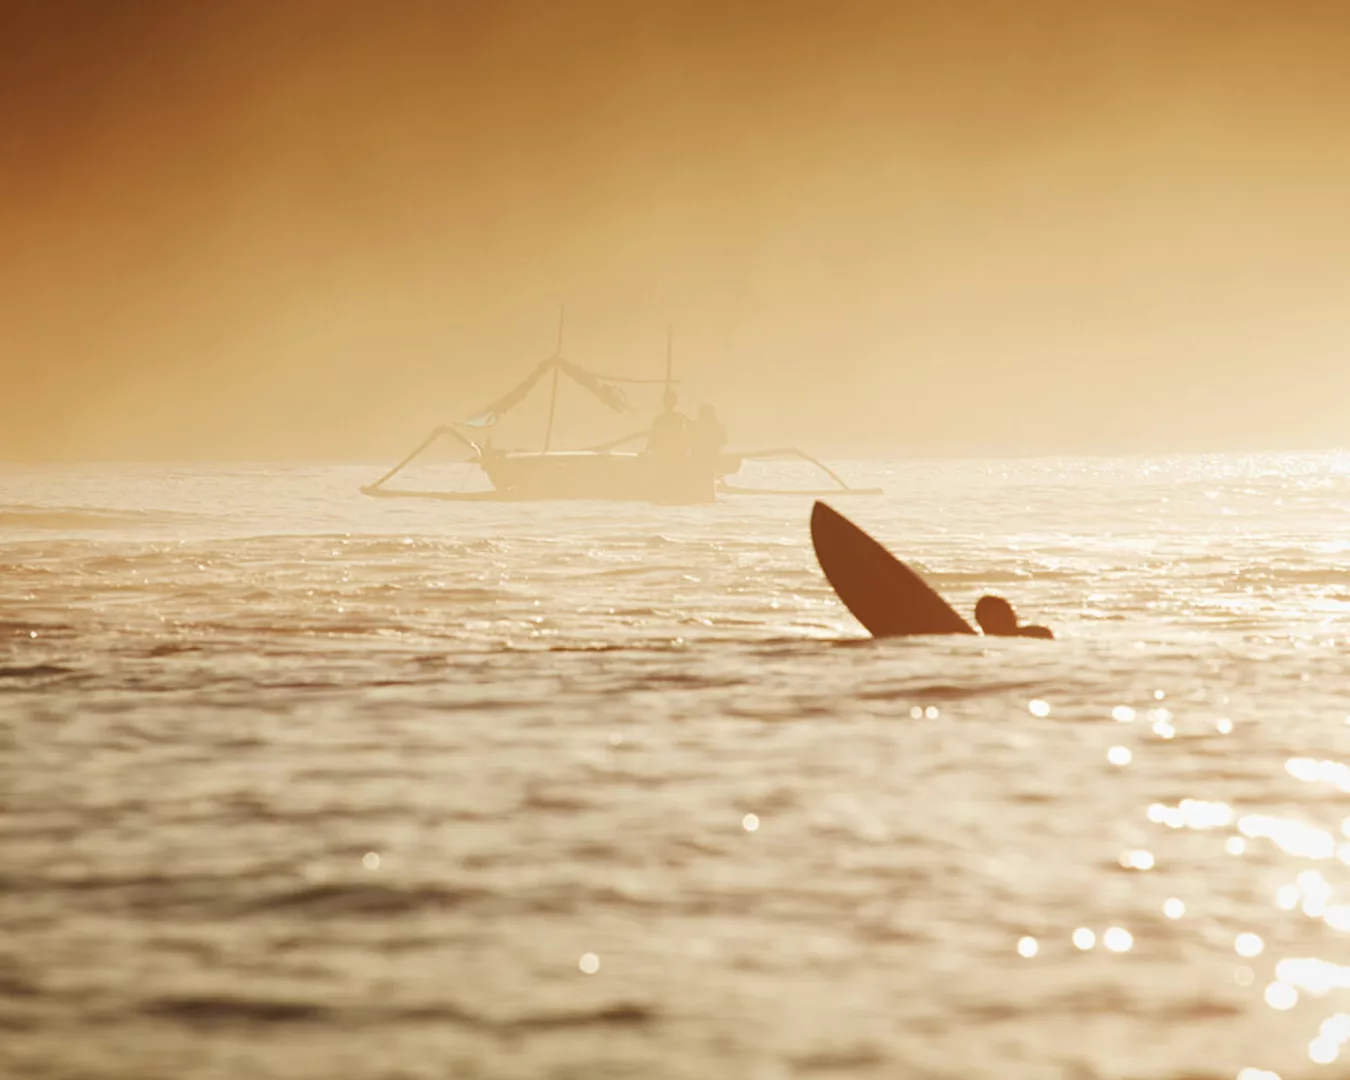 Fototapete "Lombok Surfer" 4,00x2,50 m / selbstklebende Folie günstig online kaufen